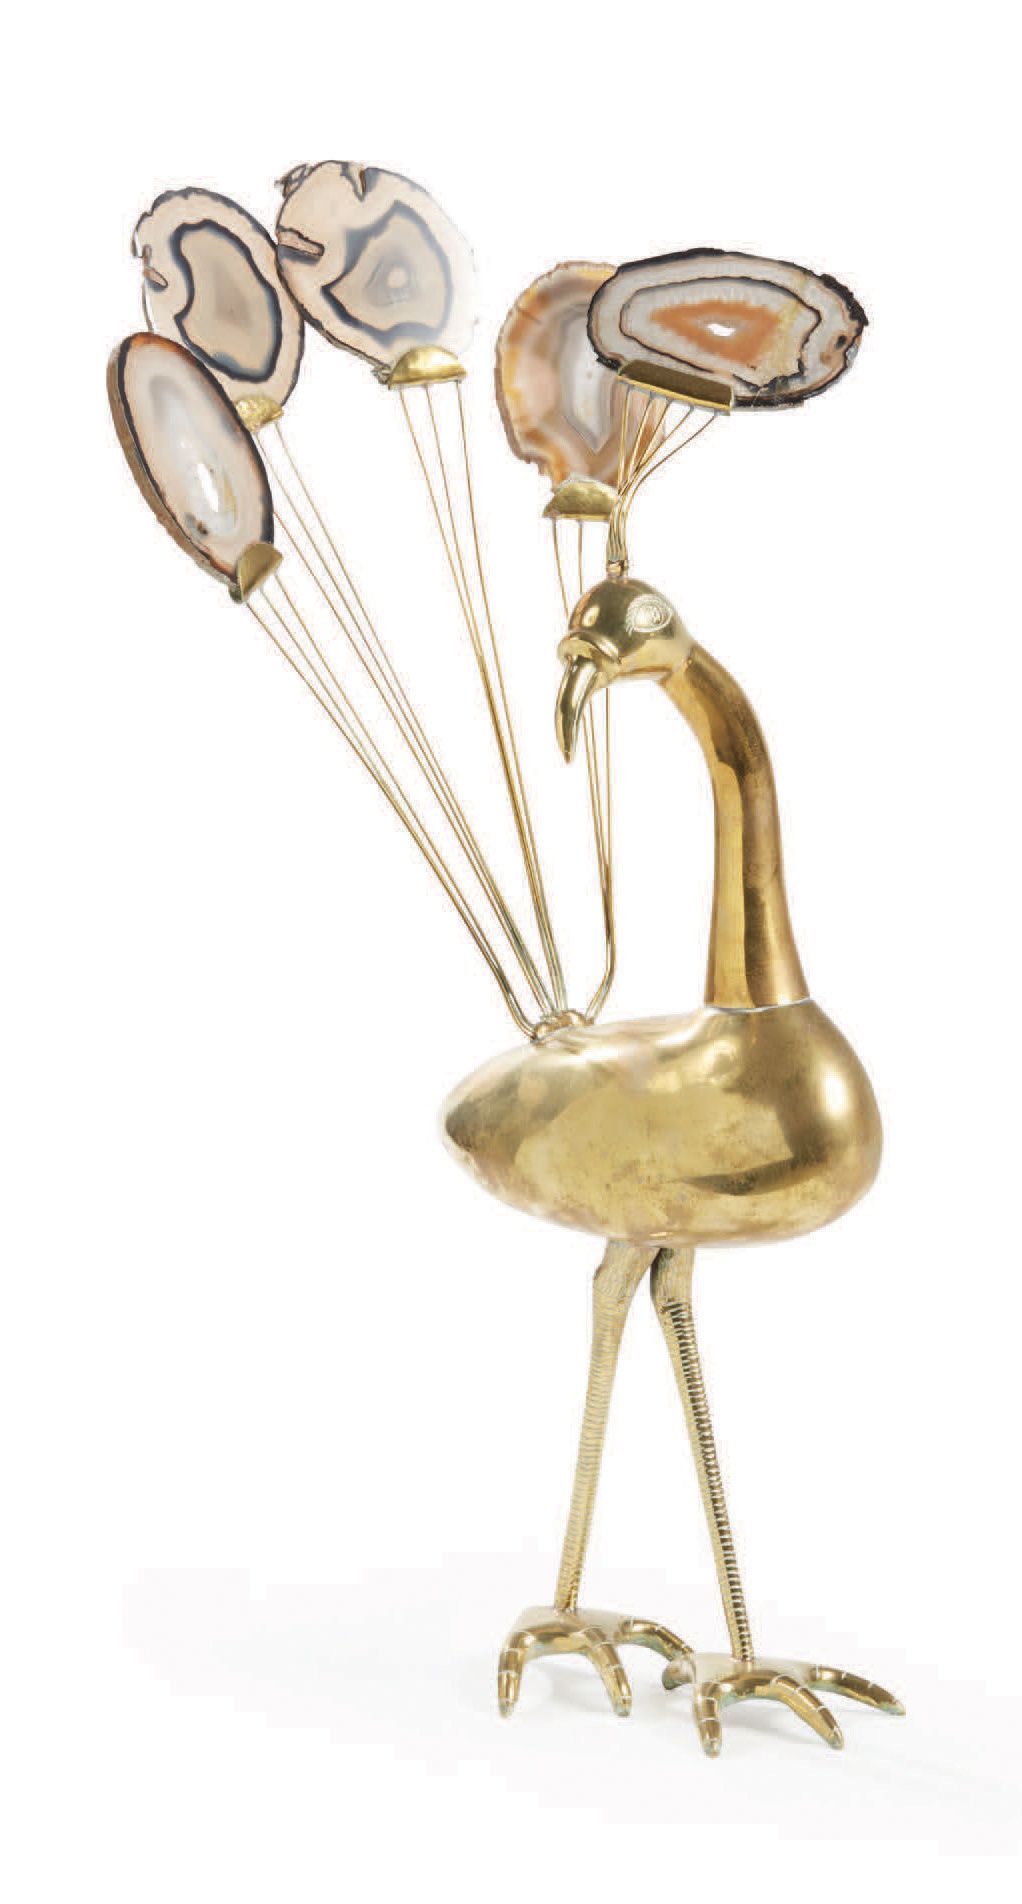 ADDIS SHERLEY (XXE) 
Escultura de metal dorado y ágata de un pavo real
Firmado
H&hellip;